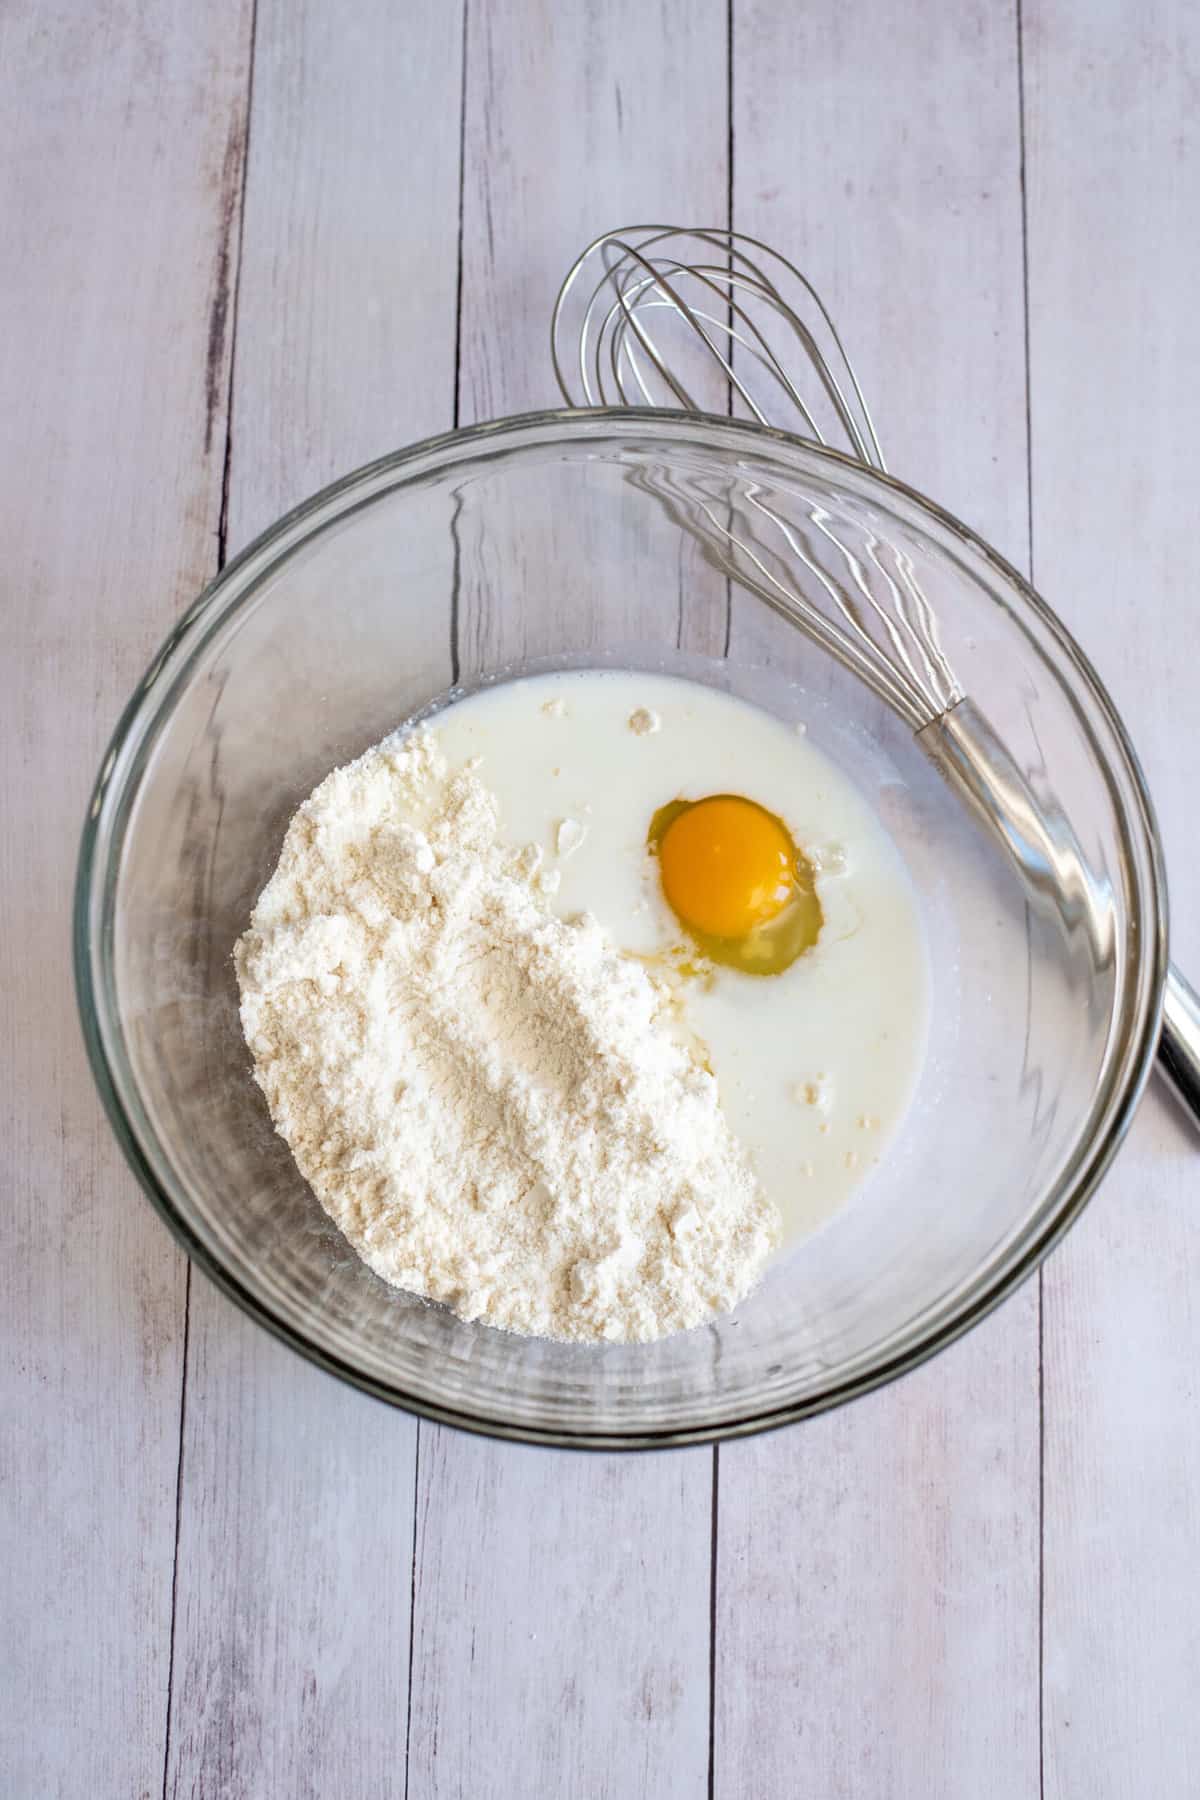 Stir together cornbread mix, egg, and buttermilk.